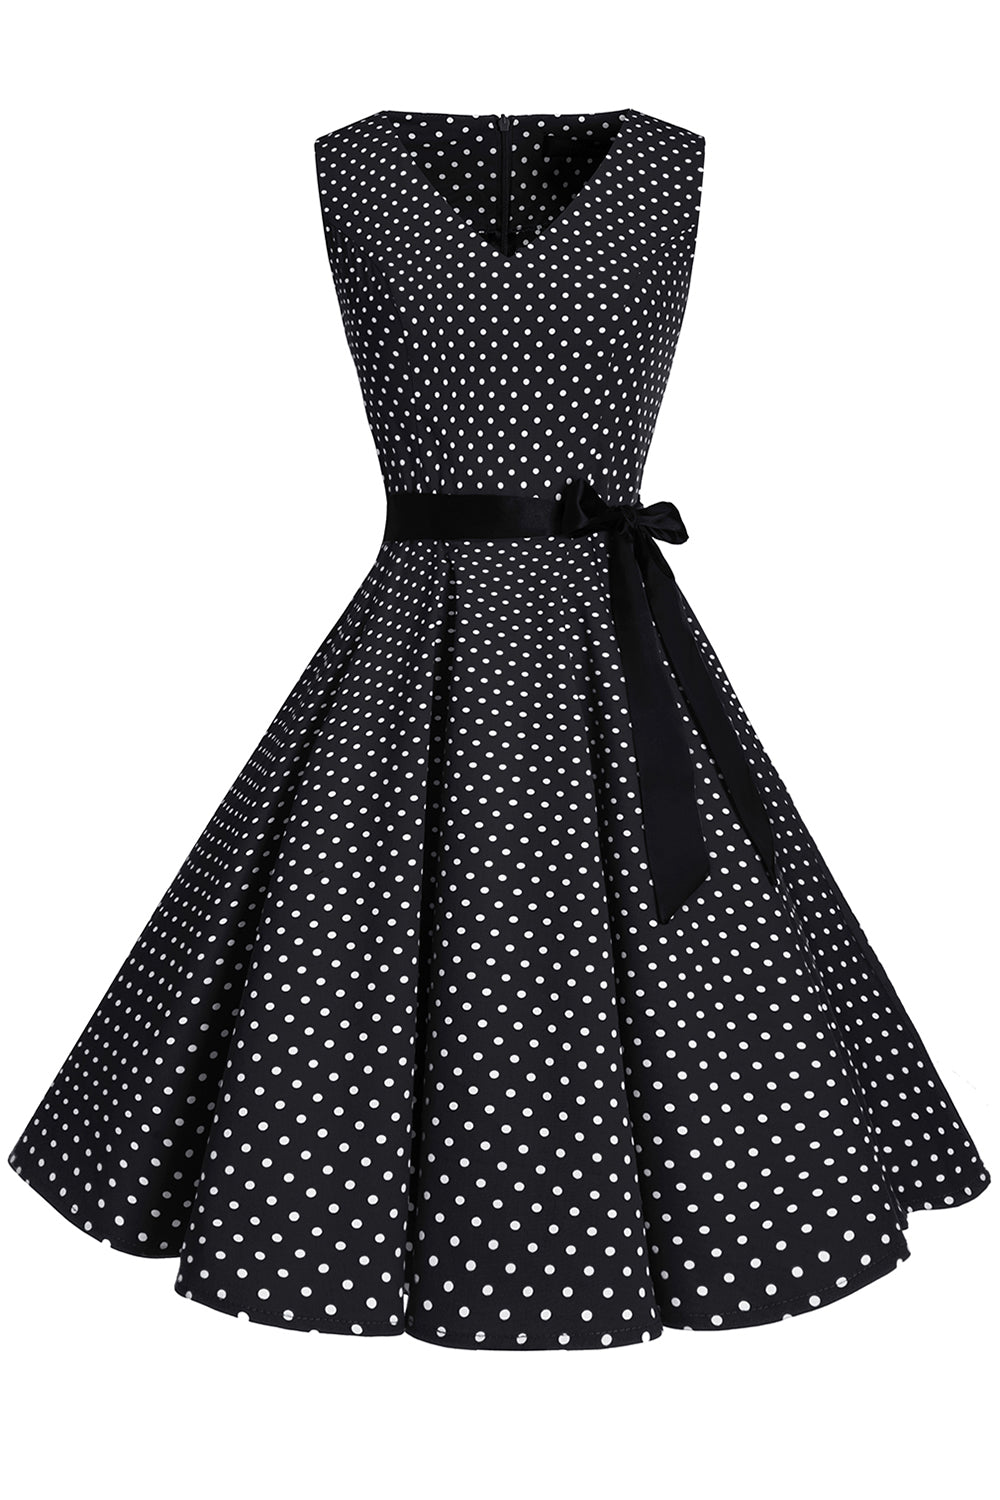 1950s Swing Dresses